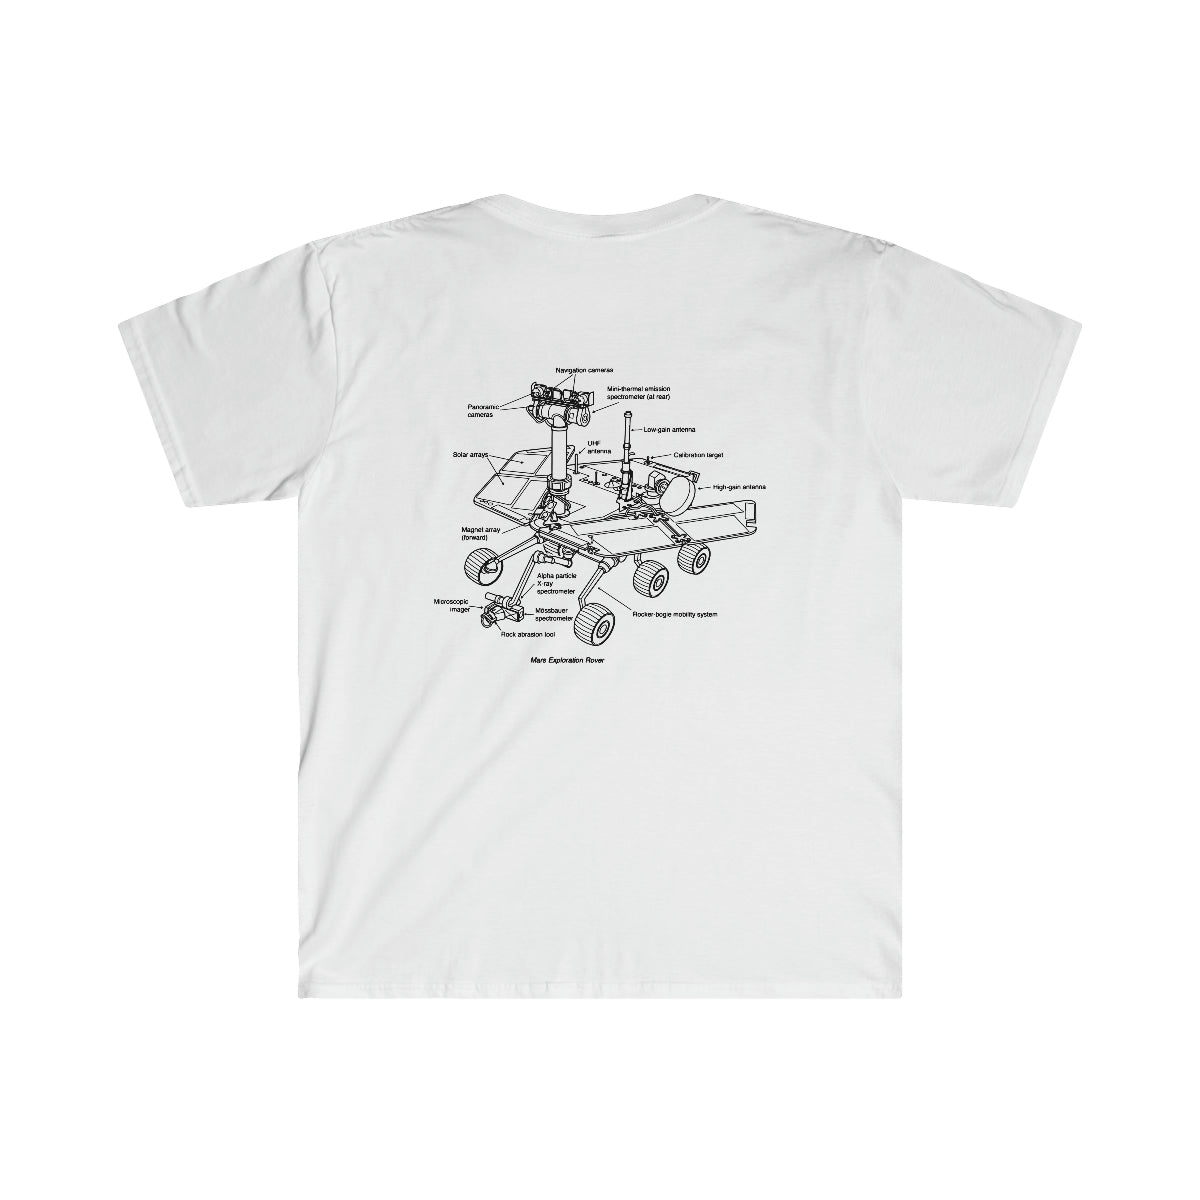 Mars Exploration Robot T-Shirt